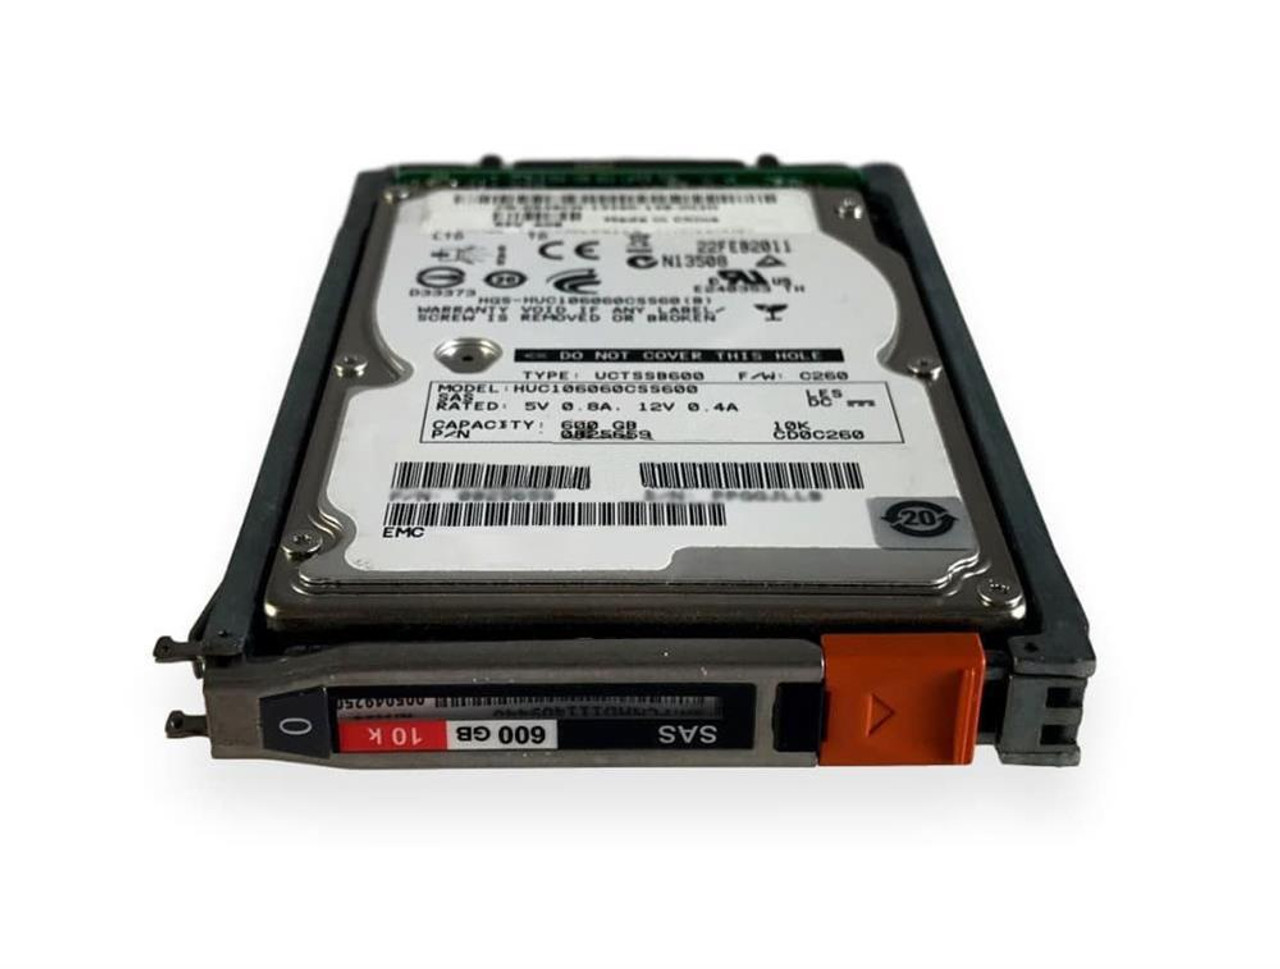 T4-2S10-600U EMC 600GB 10000RPM SAS 12Gbps 2.5-inch Internal Hard Drive for 25 x 2.5 Enclosure